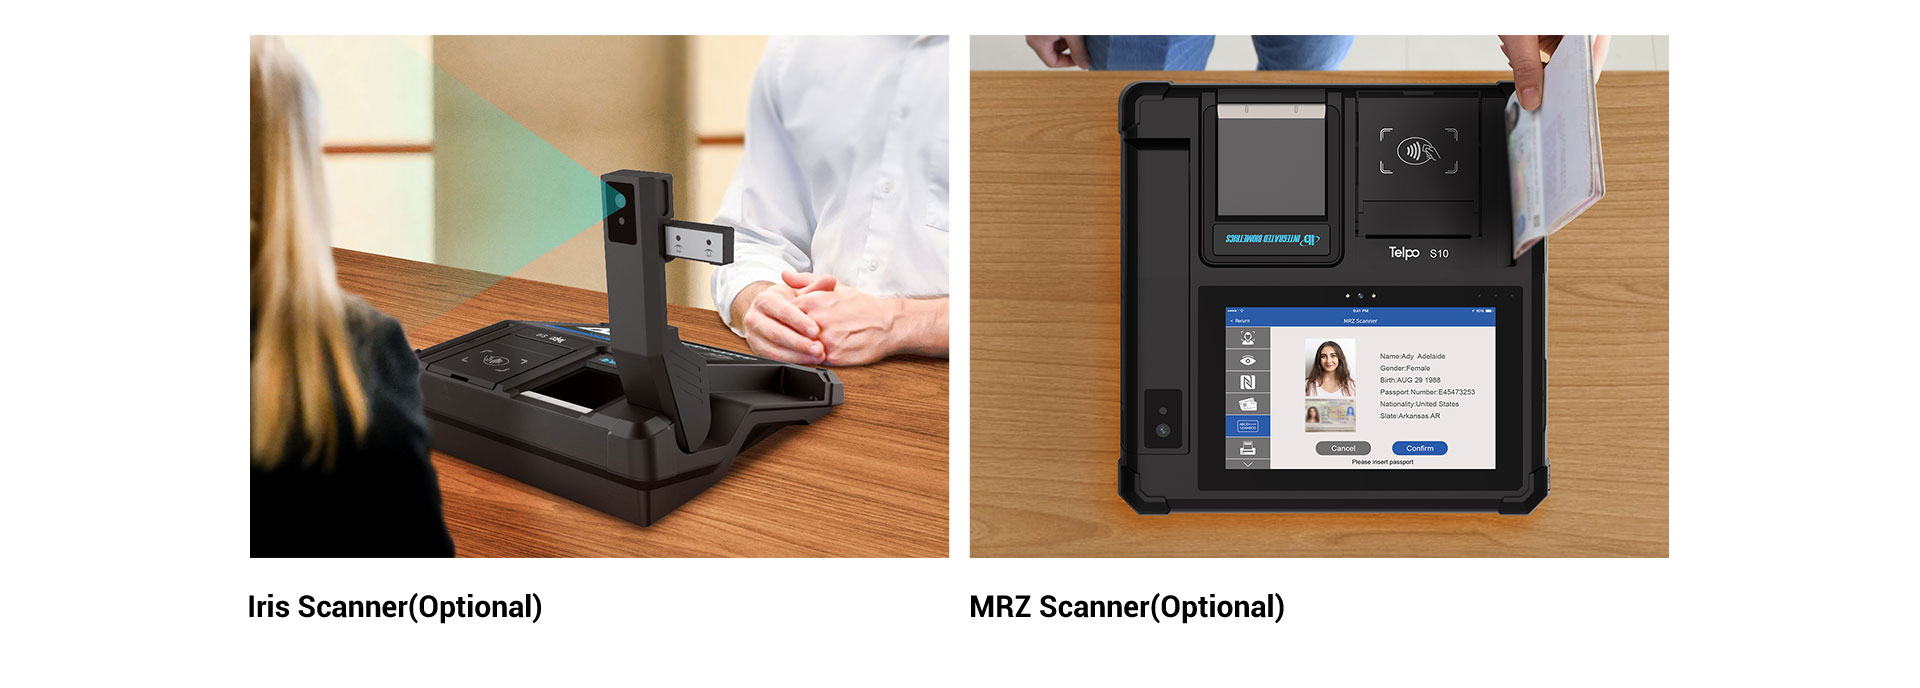 Desktop Fingerprint scanner device with Iris Scanner and MRZ scanner telpo S10